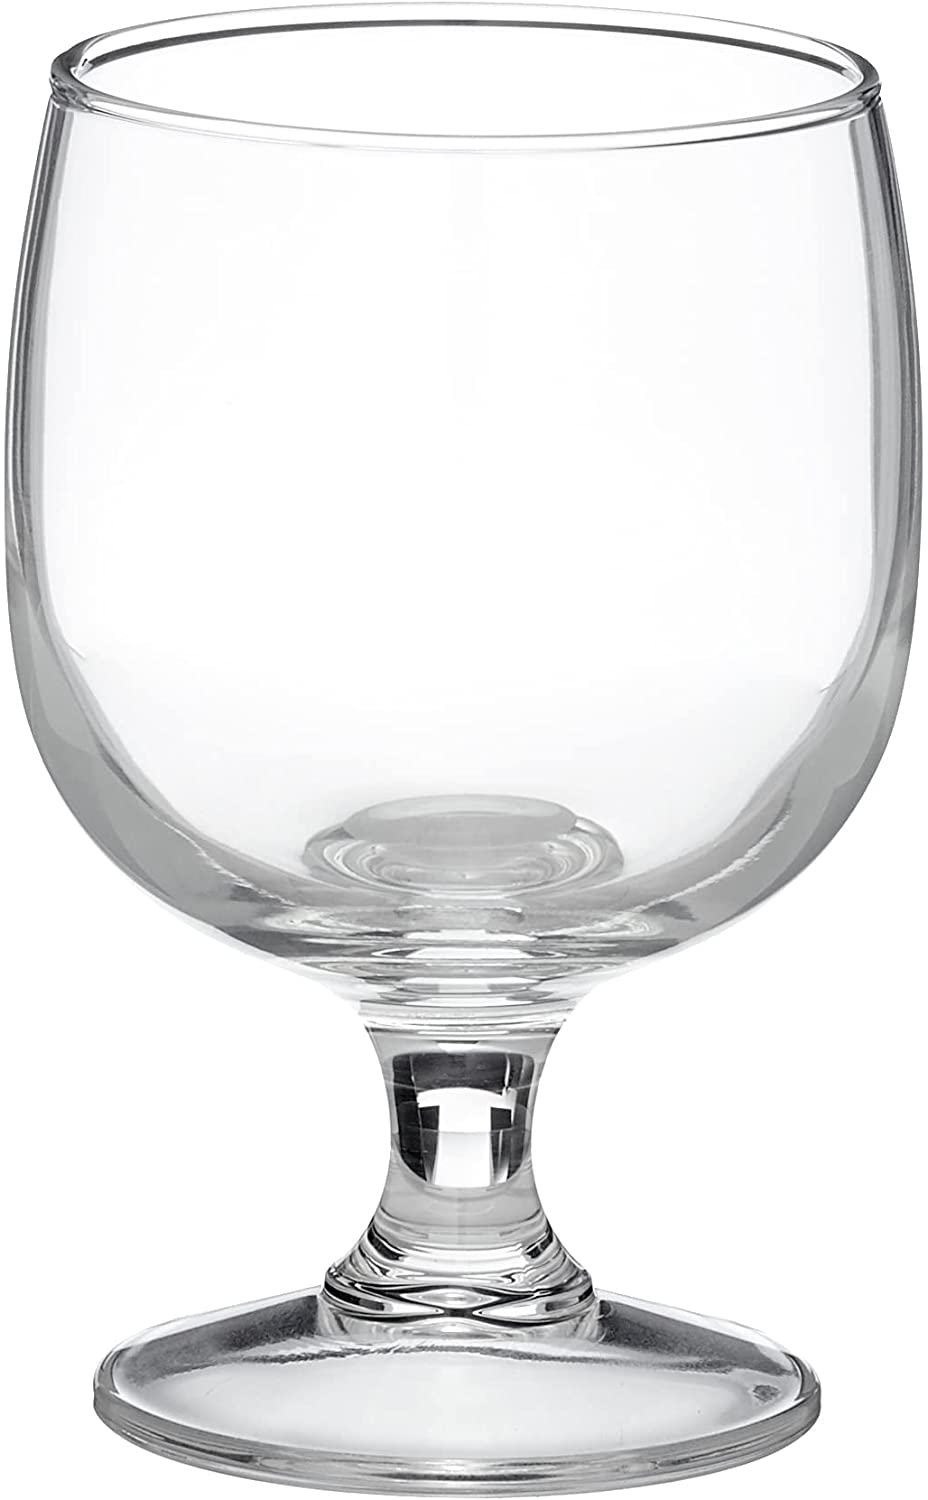 Arcoroc ARC E3559 Amélia Drinking Glass, Water Glass, Juice Glass, Goblet, 190 ml, Glass, Transparent, Pack of 12